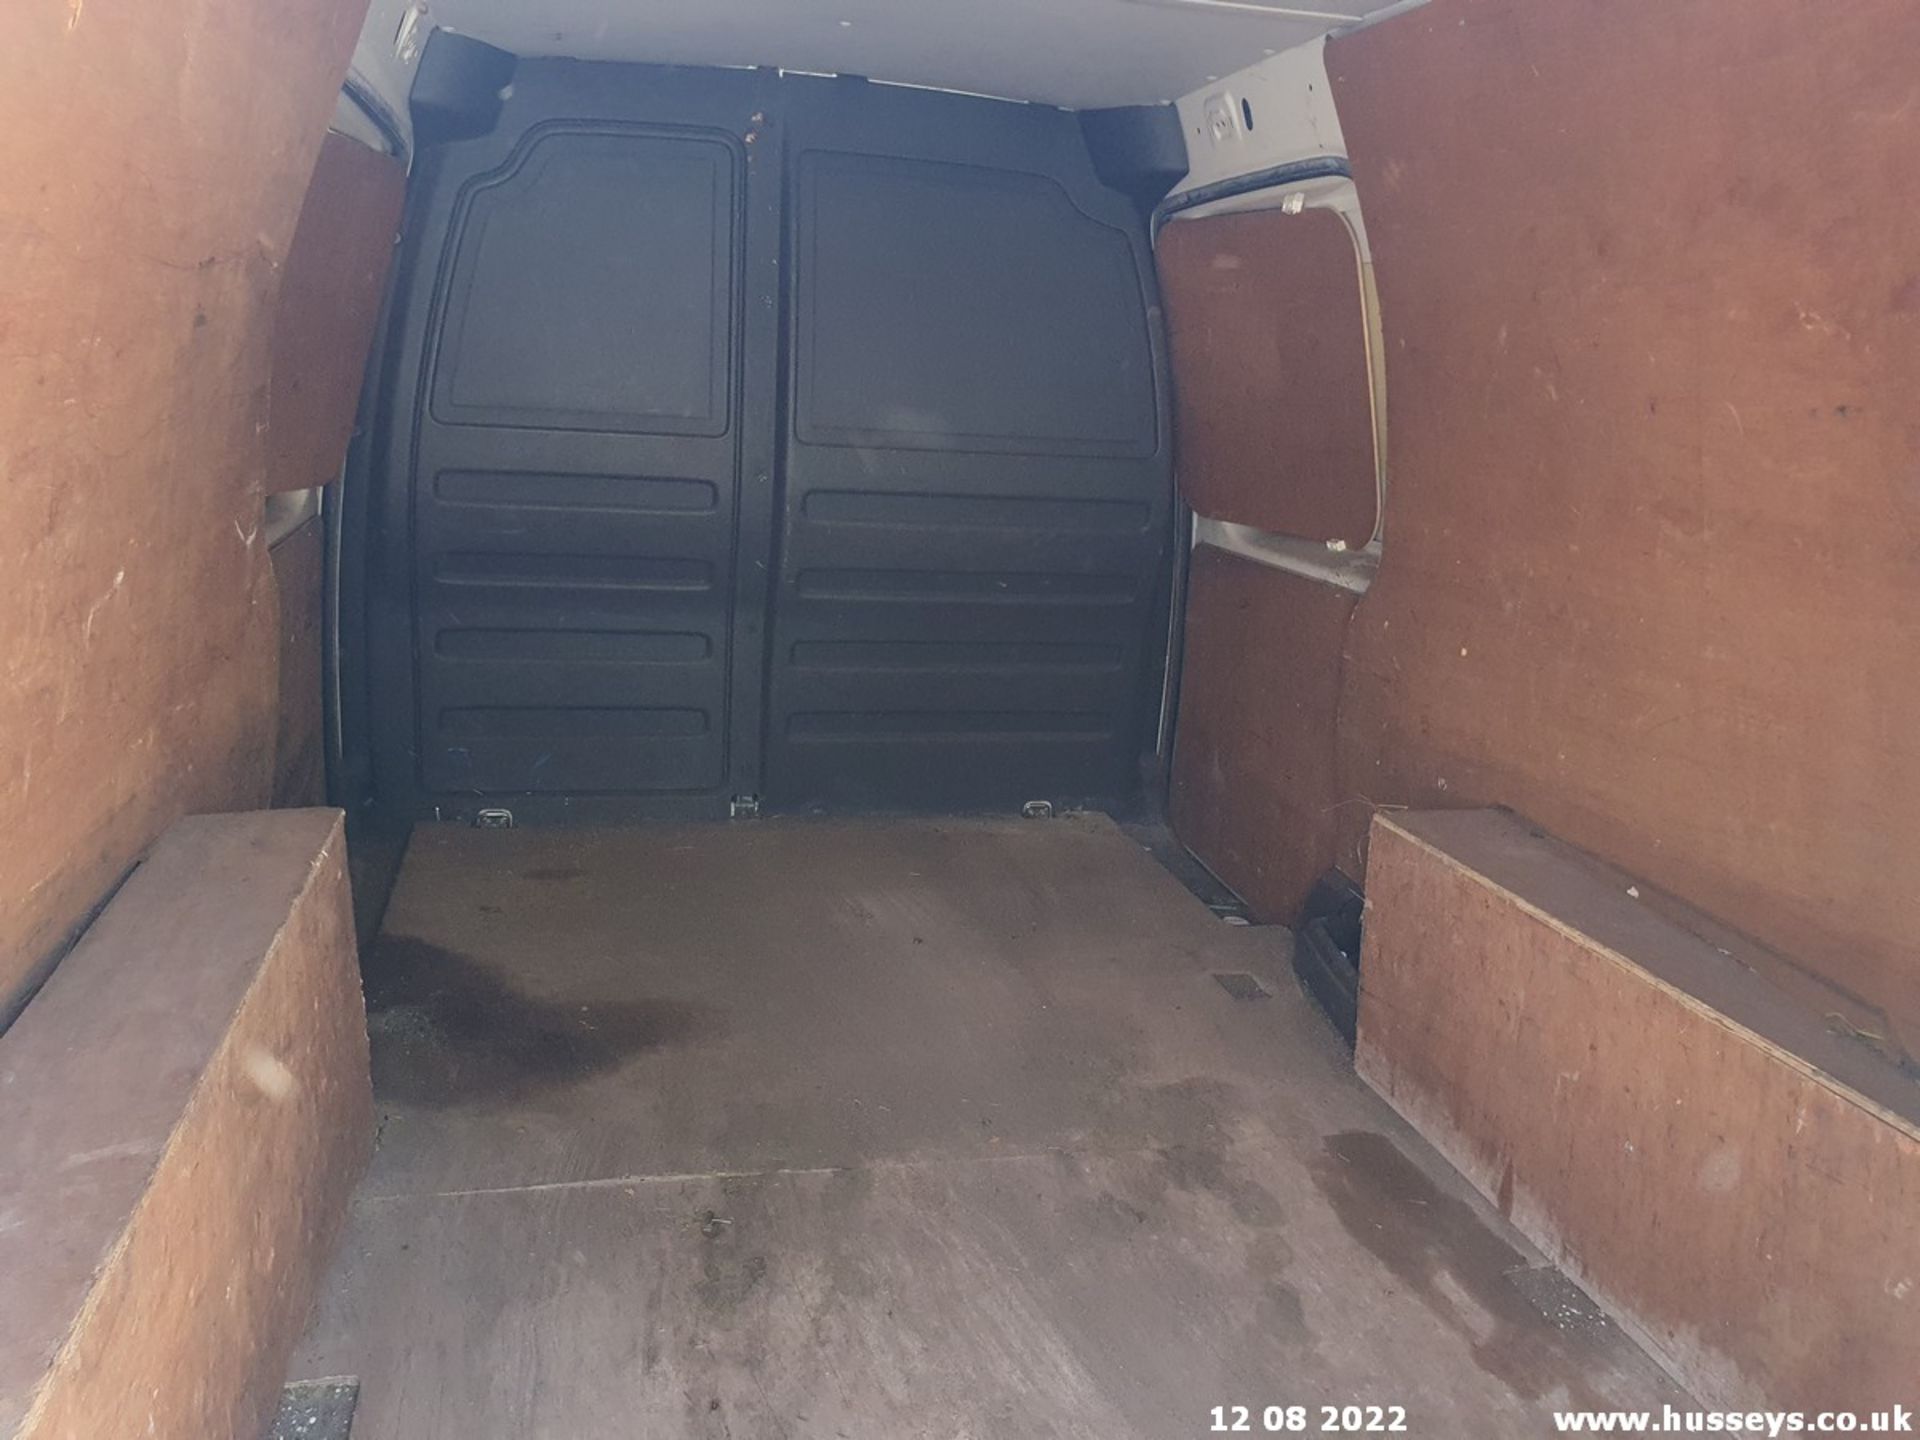 12/62 VOLKSWAGEN CADDY MAXI C20 TDI - 1598cc Van (White, 156k) - Image 25 of 32